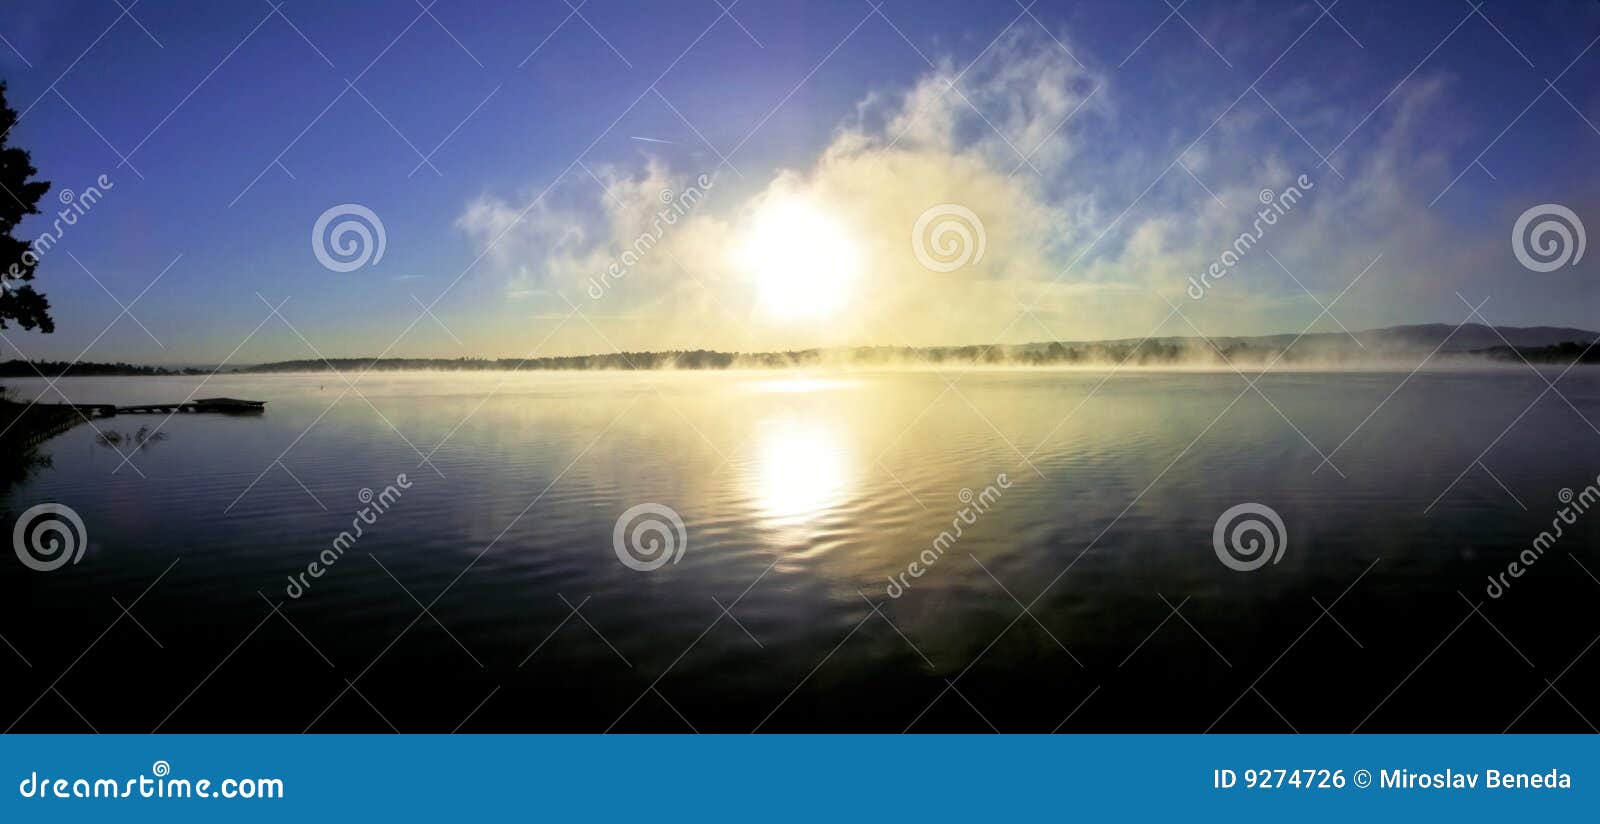 panoramic - sunrise over lake with haze